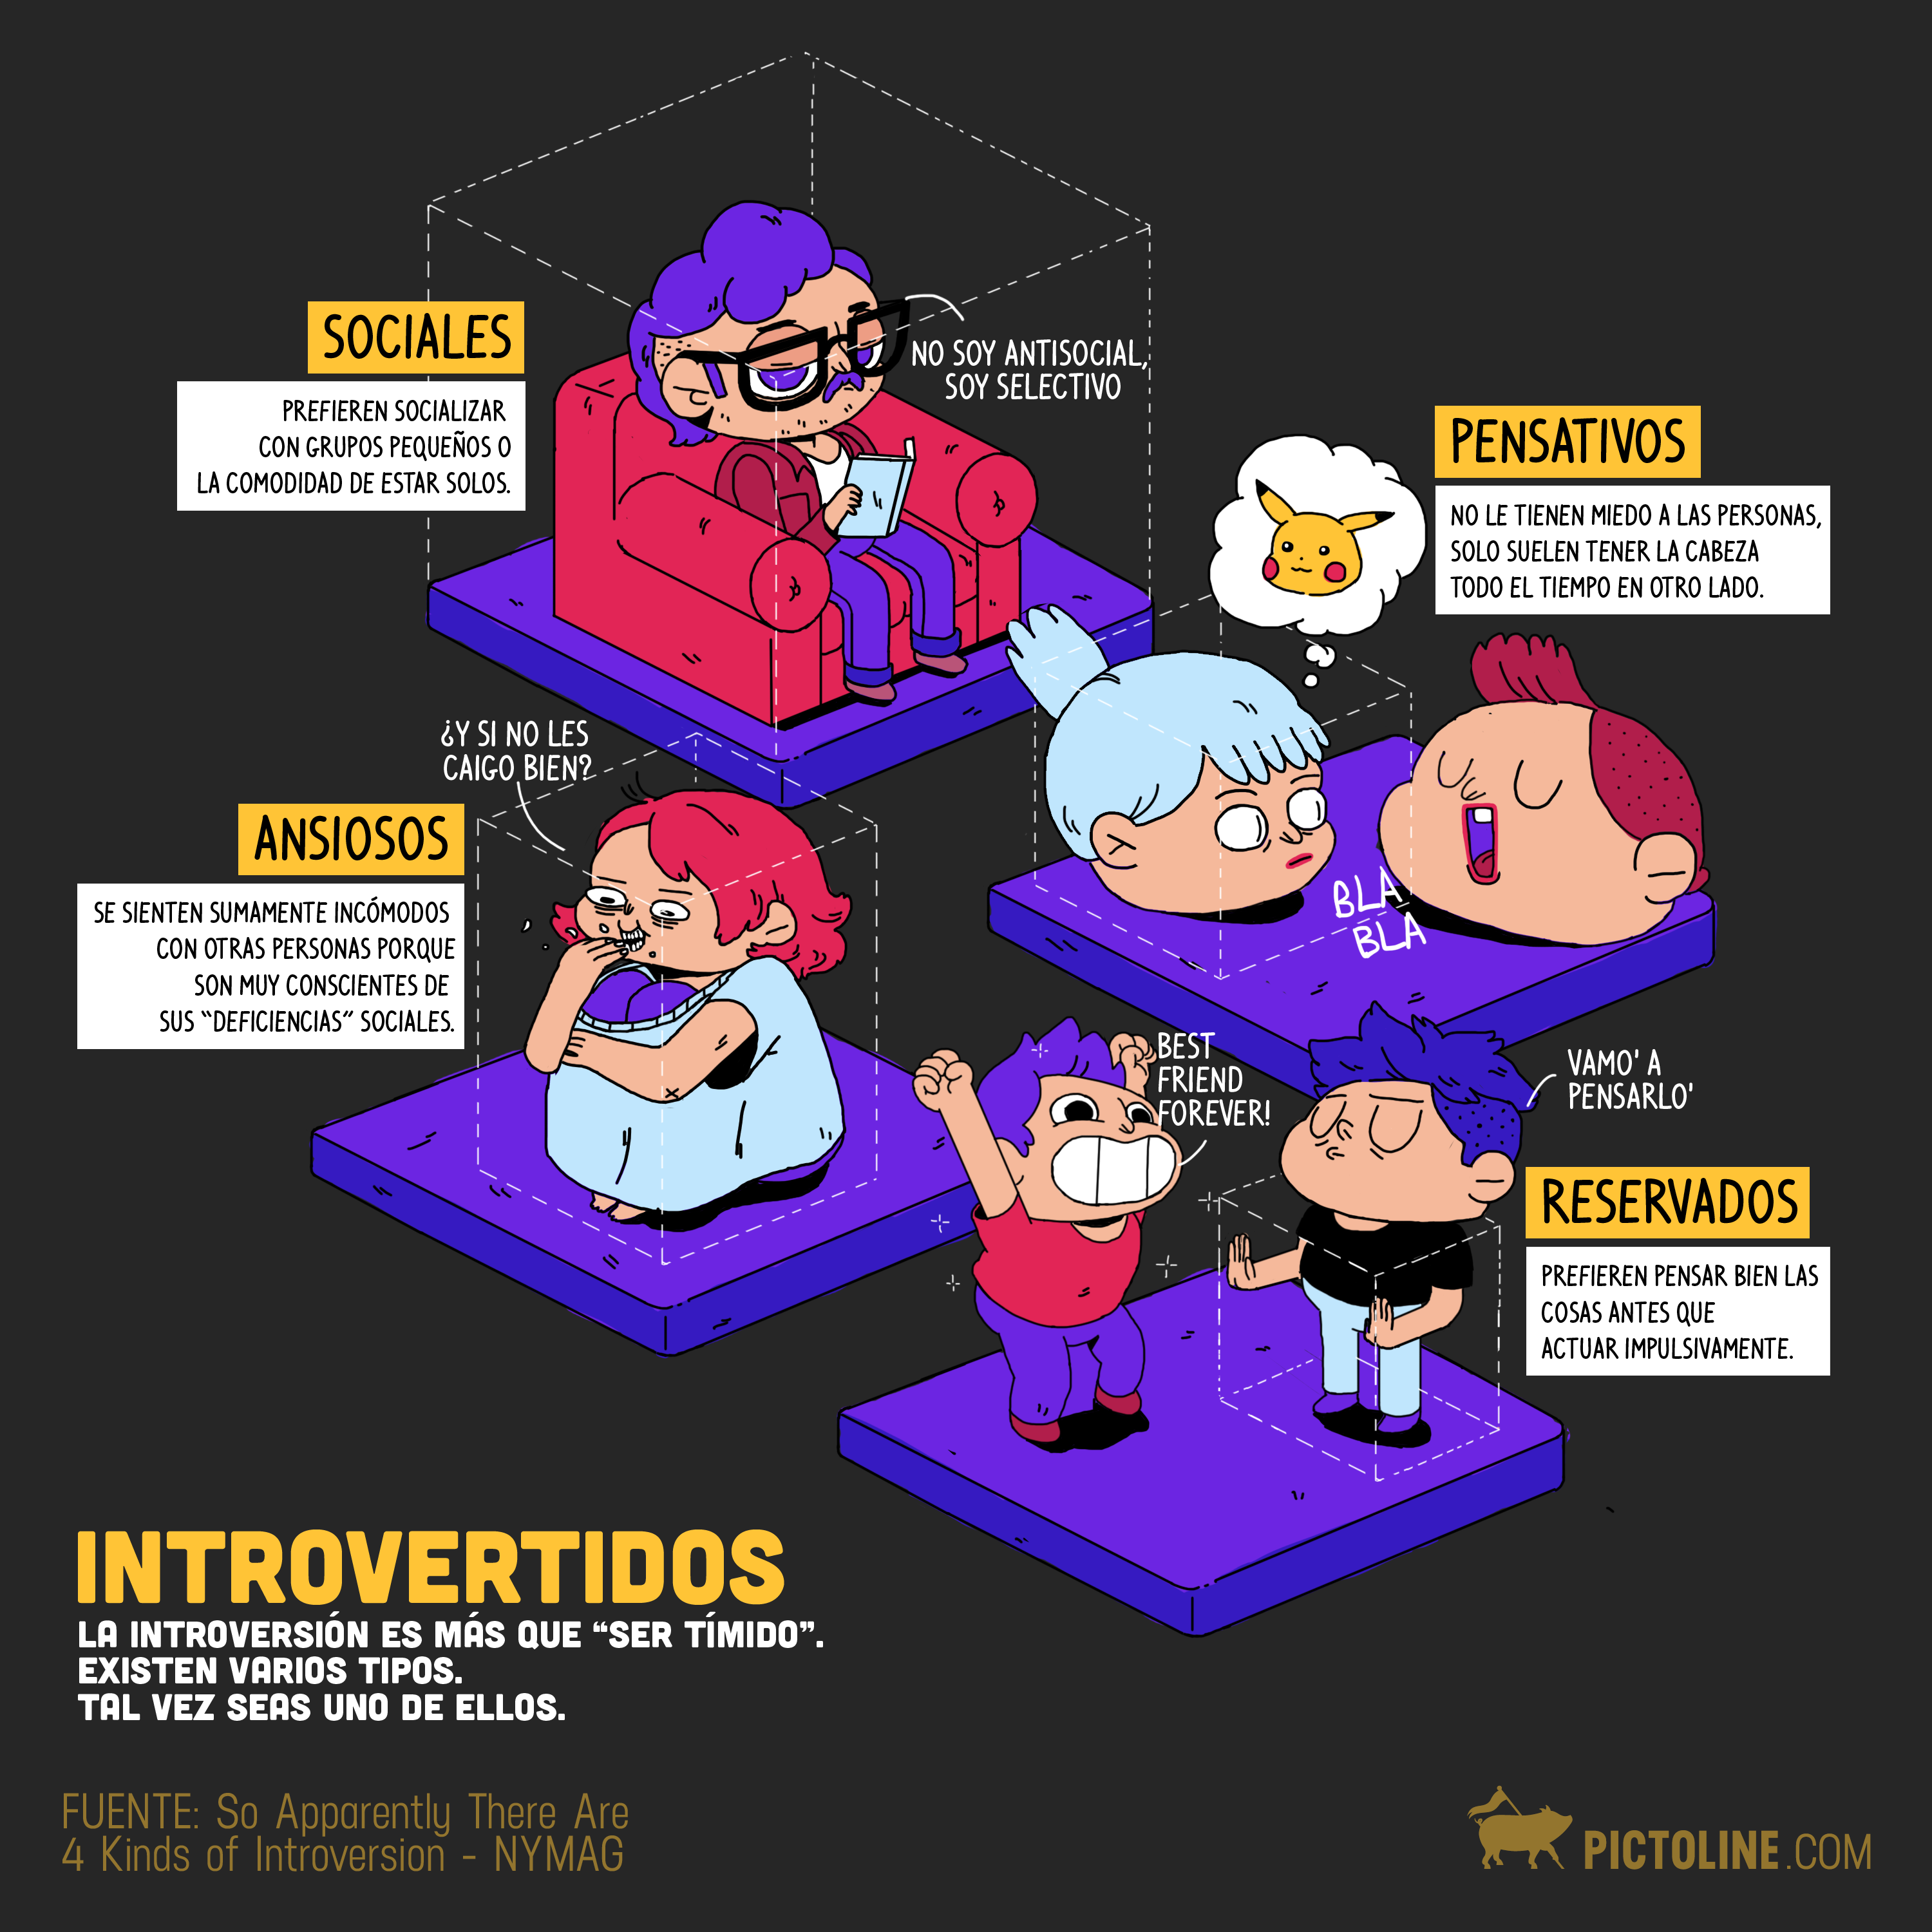 Introvertidos